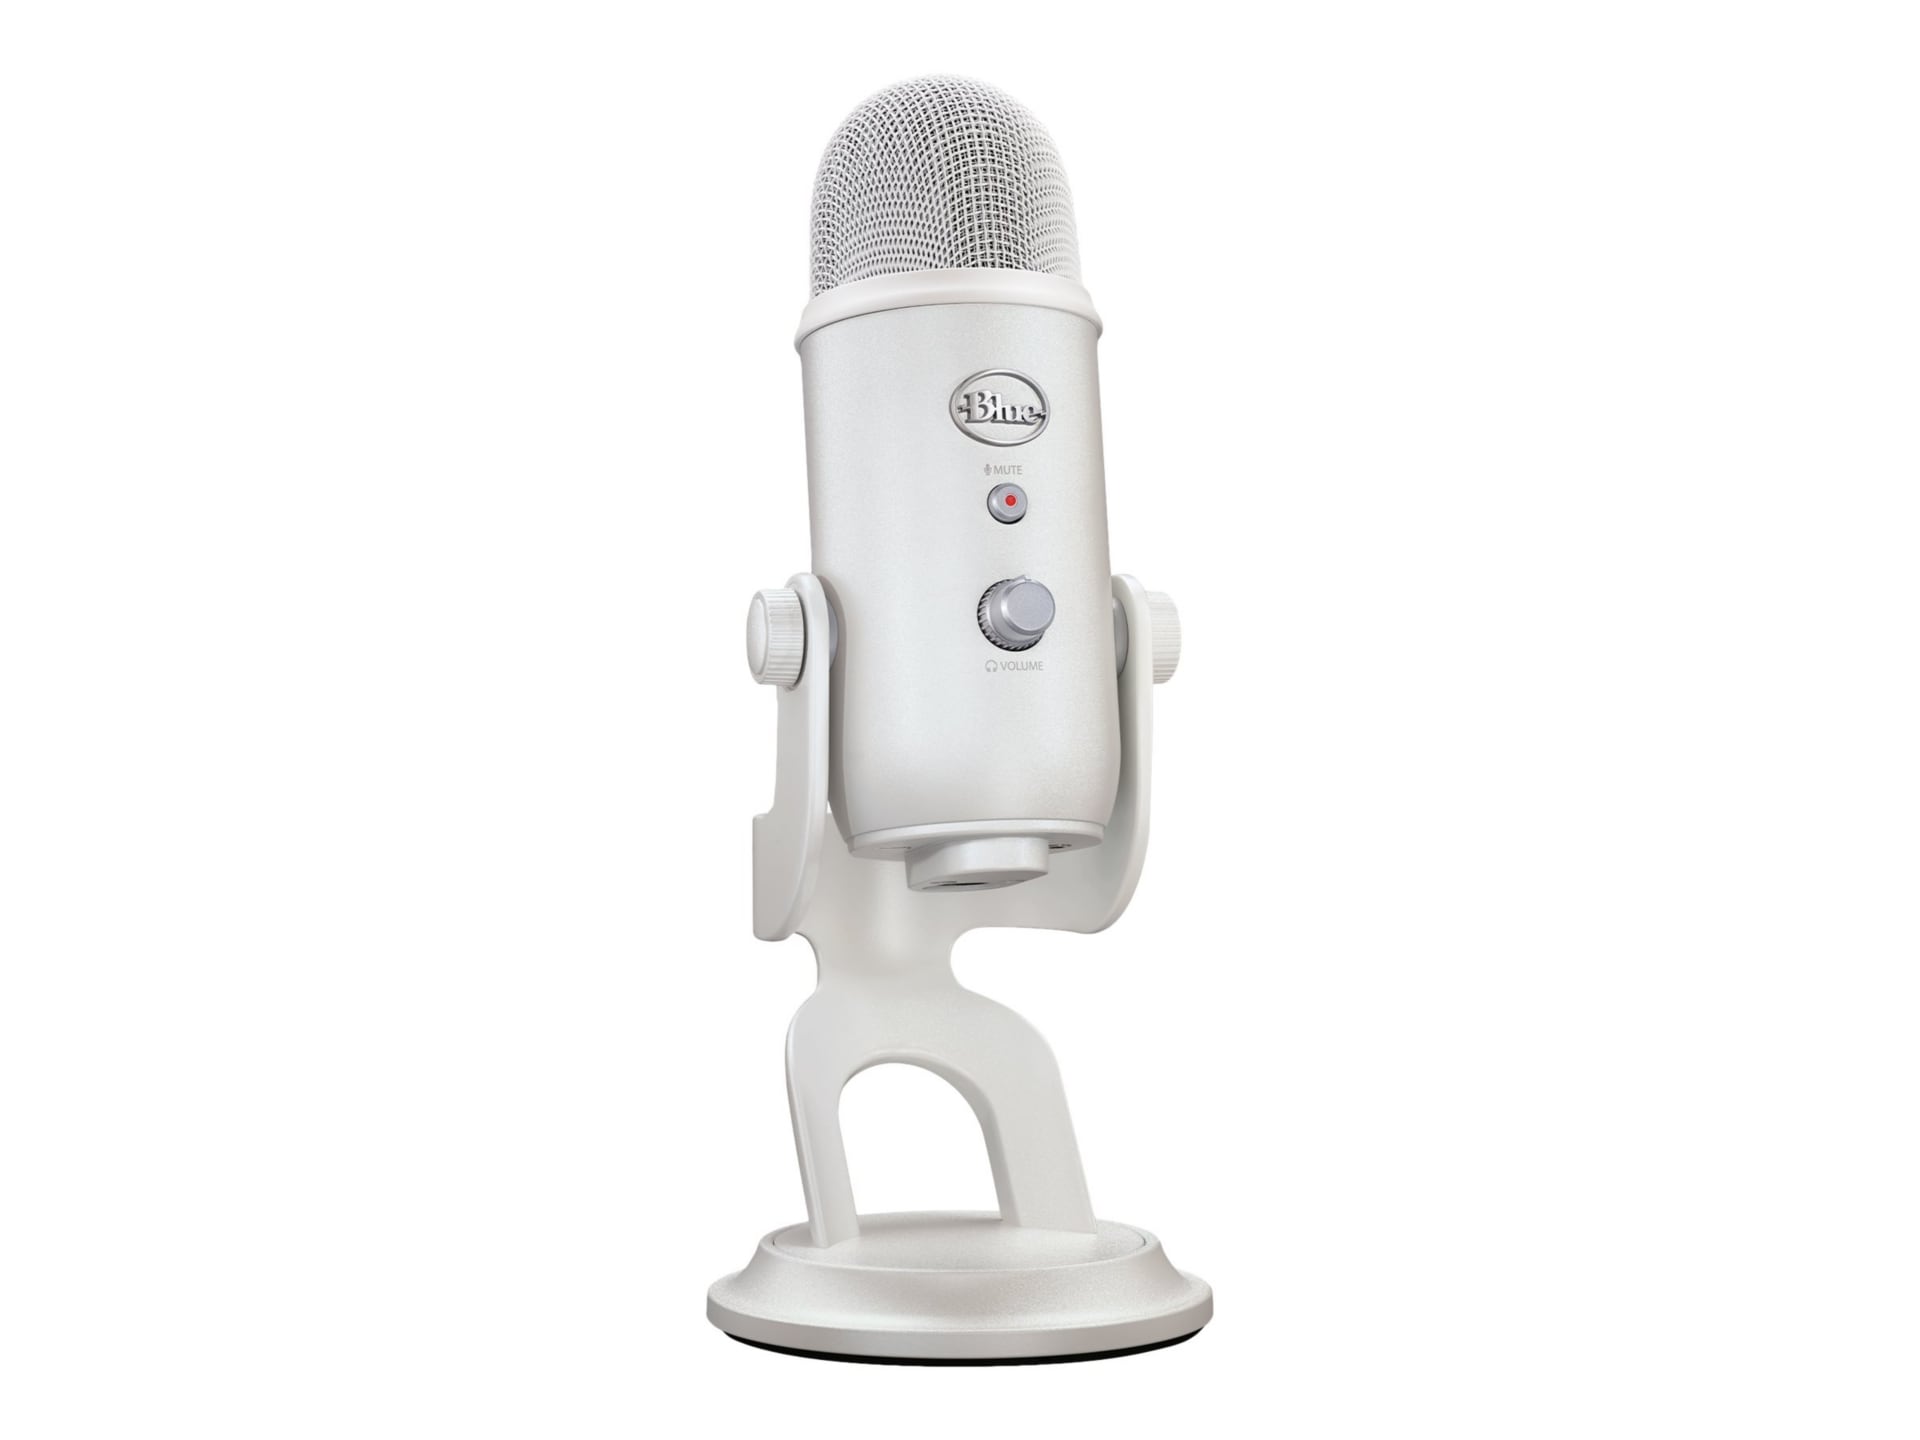 Logitech Blue Yeti Premium USB Gaming Microphone, Special Edition Finish -